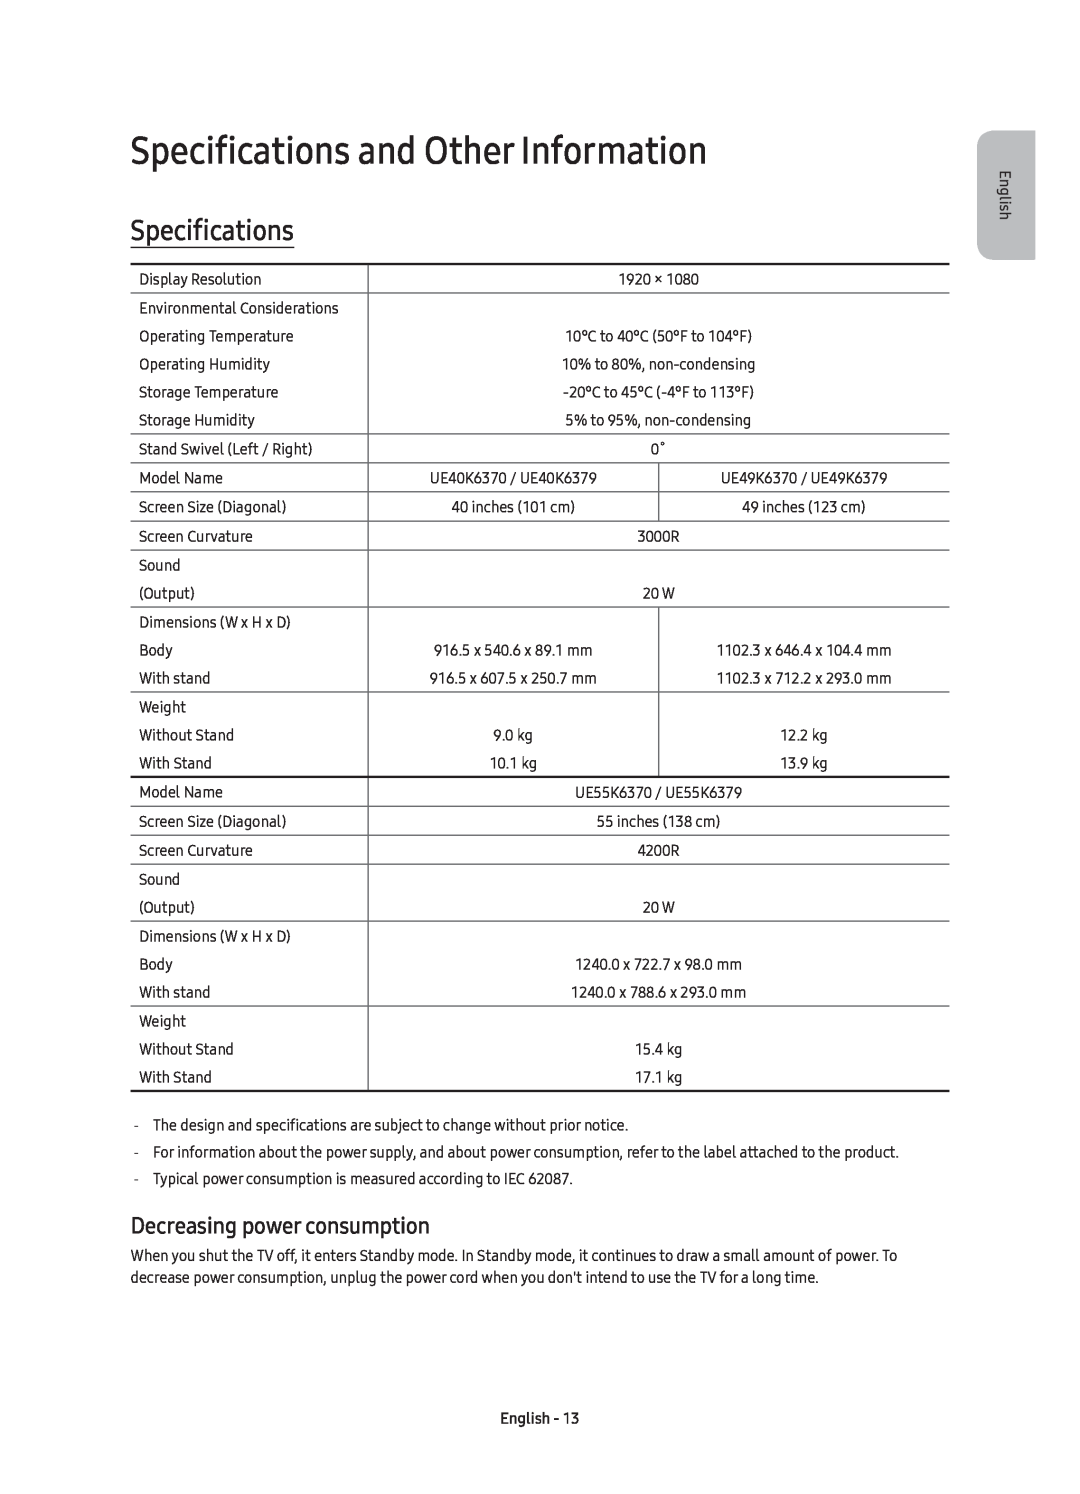 Samsung UE40K6370SUXZG, UE40K6379SUXZG manual Specifications and Other Information, Decreasing power consumption, English 